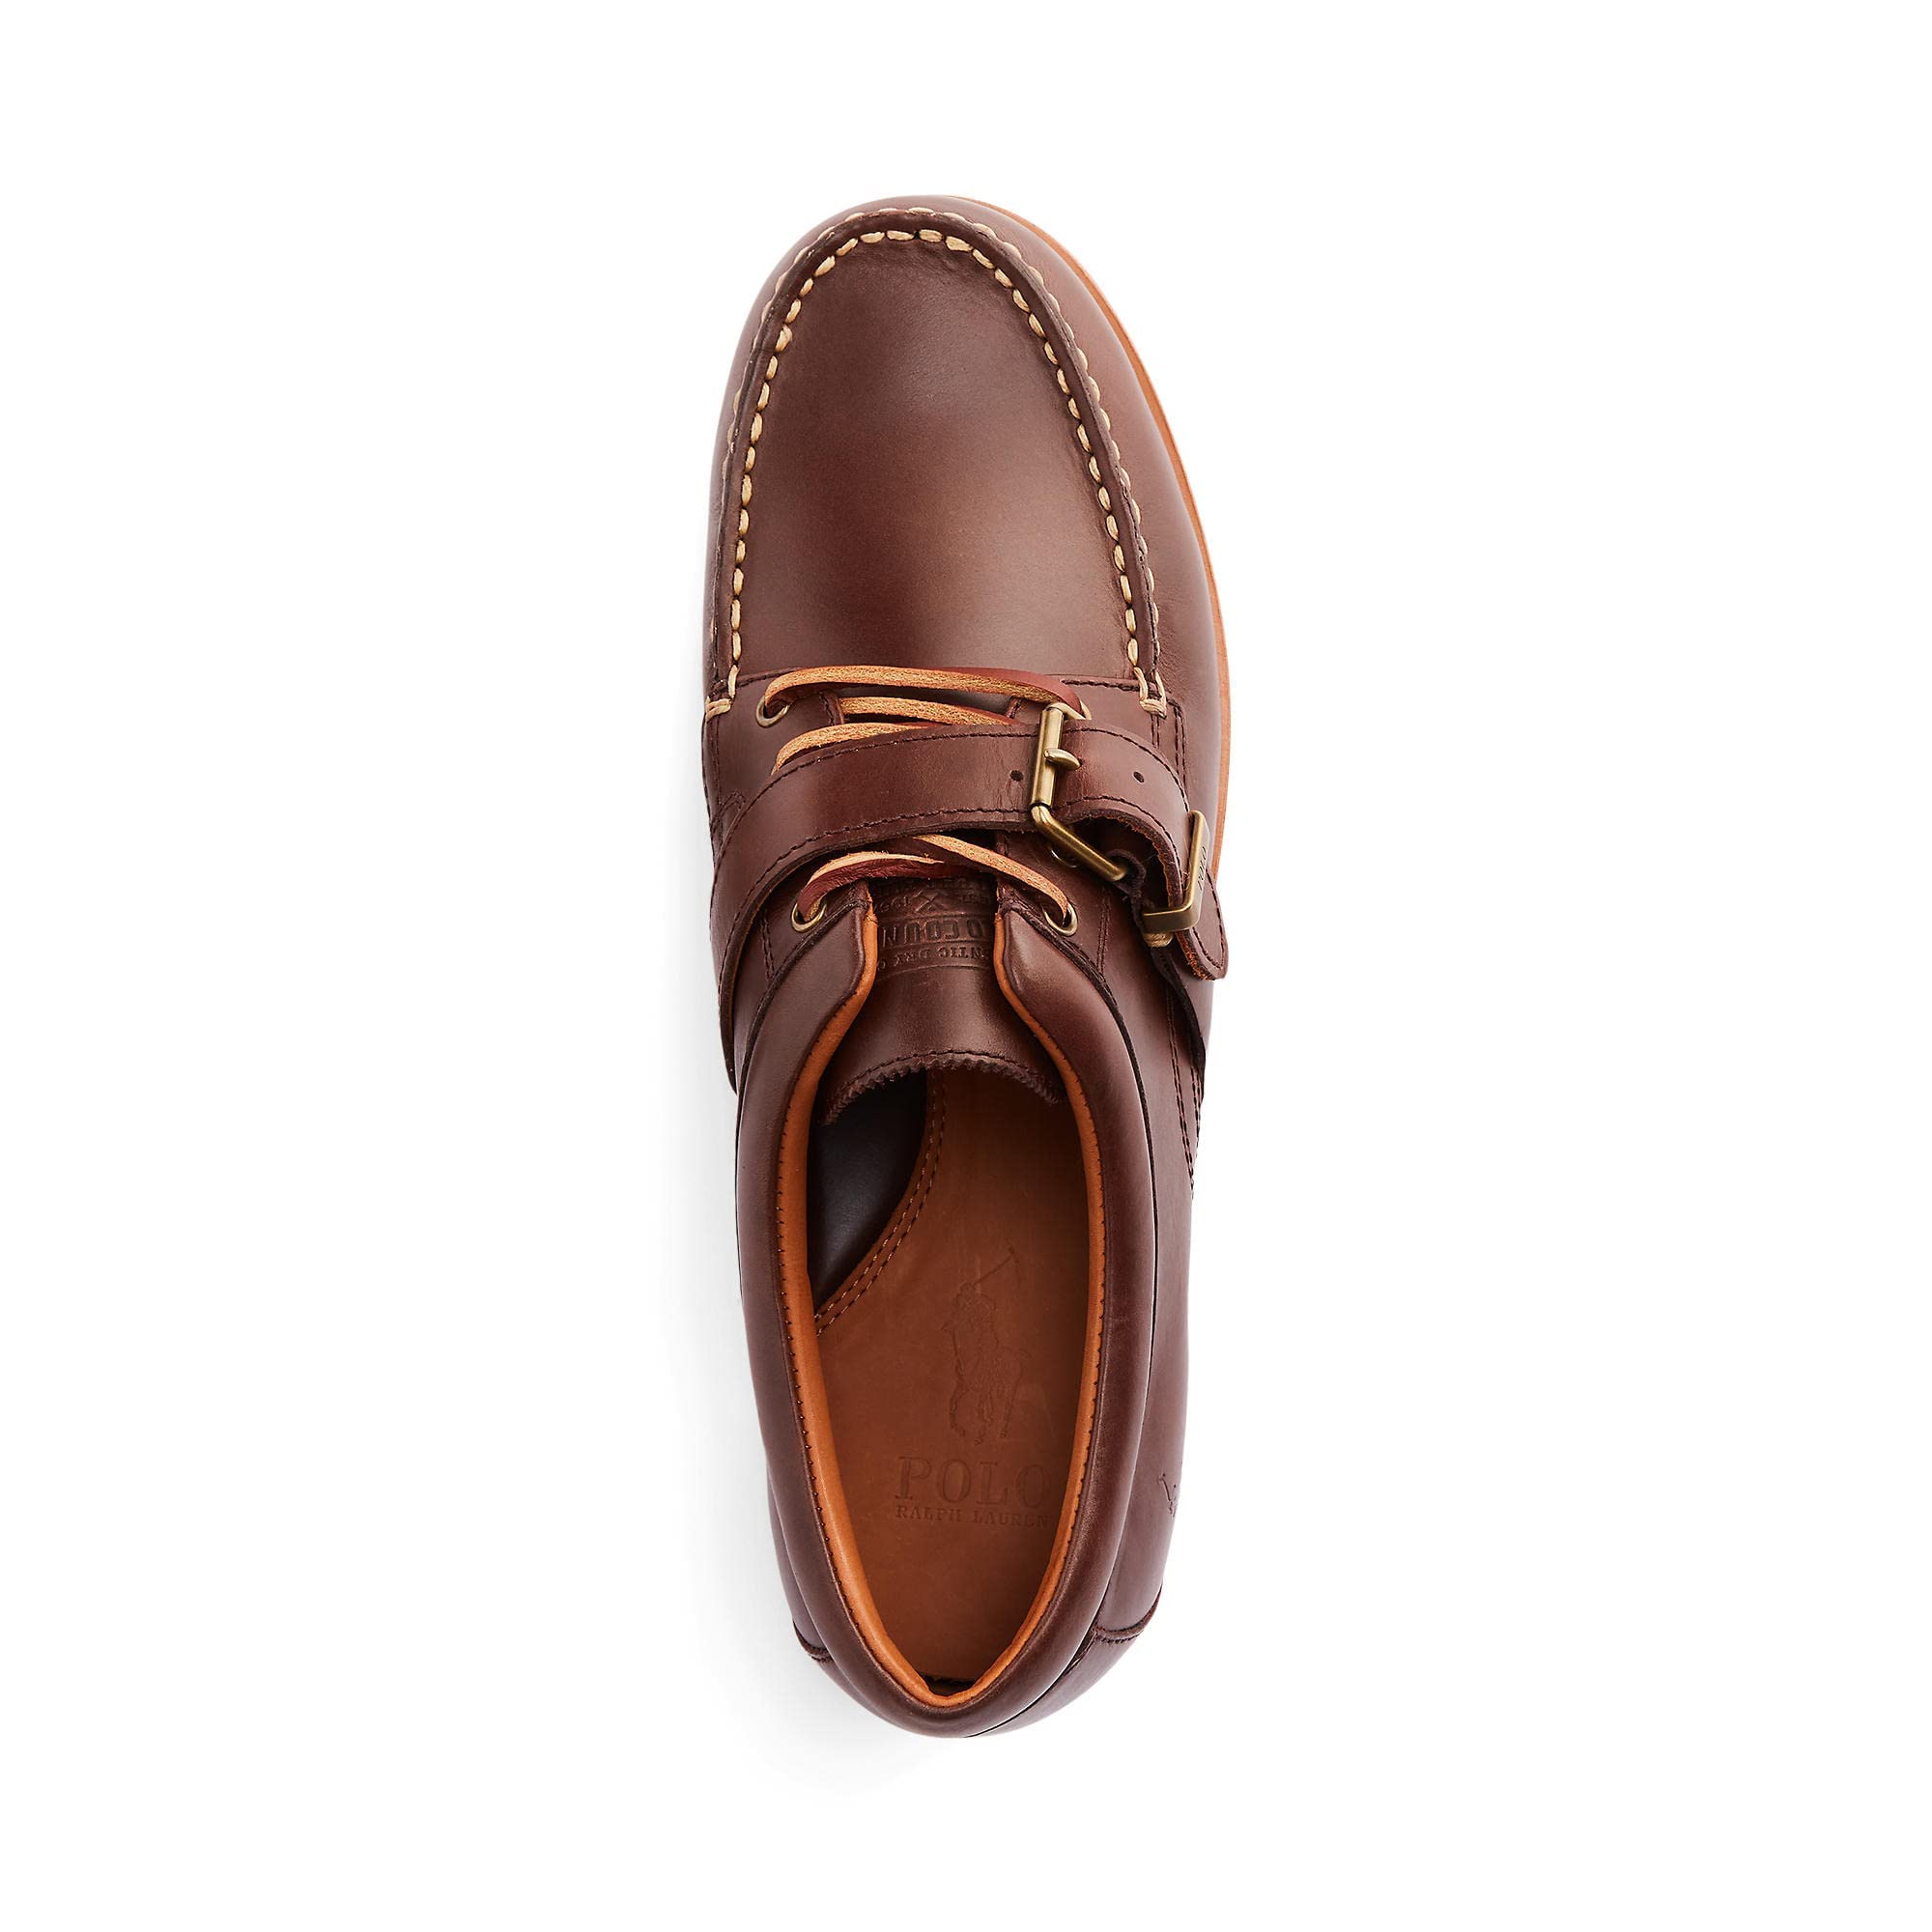 Polo Ralph Lauren Y5 (Boys) “Sander-CL” Boat Shoes Khaki/Tan-Canvas/Leather  NEW | eBay